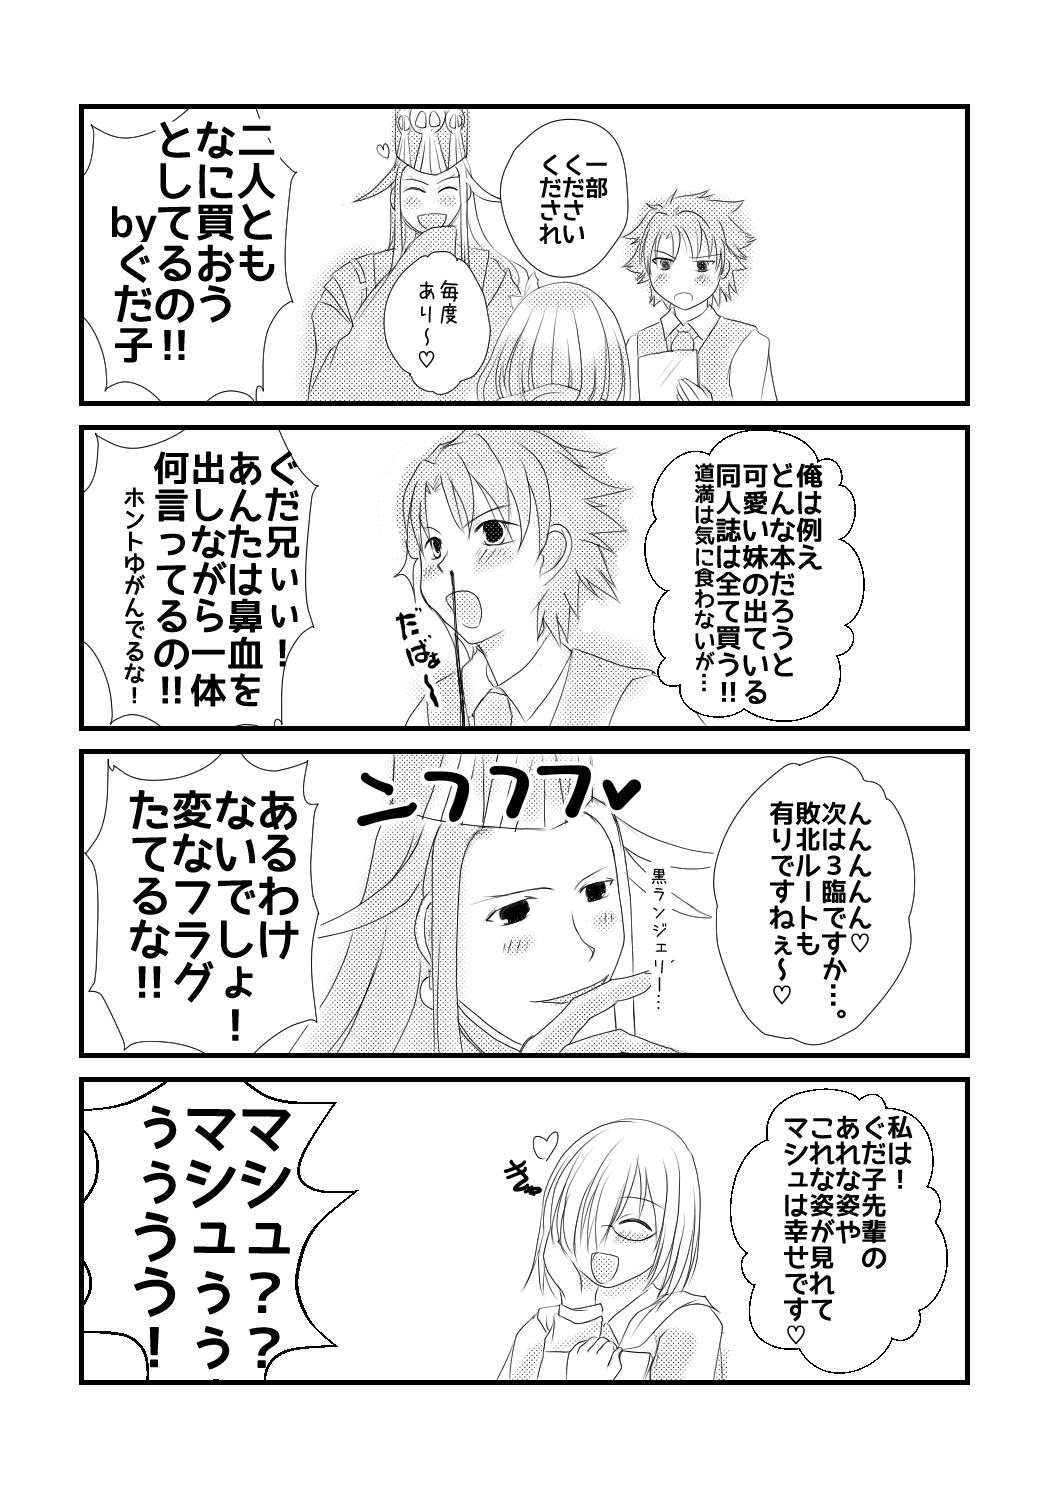 ] Rin guda ♀ rakugaki guda yuru manga(Fate/Grand Order] 7